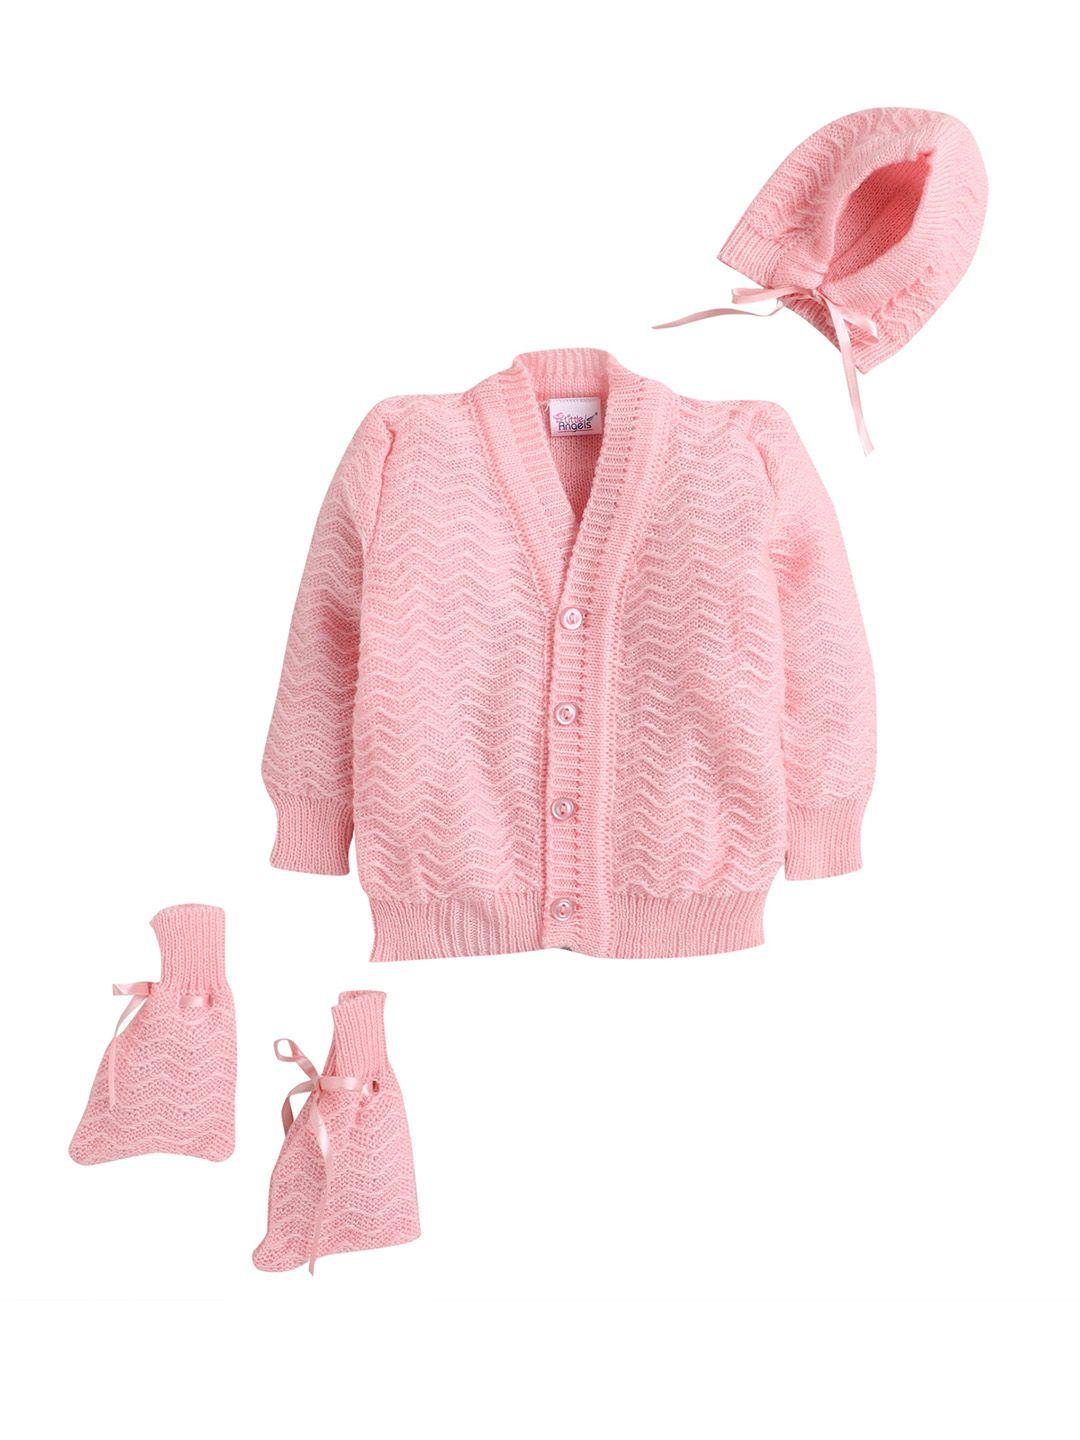 little angels unisex kids peach-coloured self design cardigan sweater set